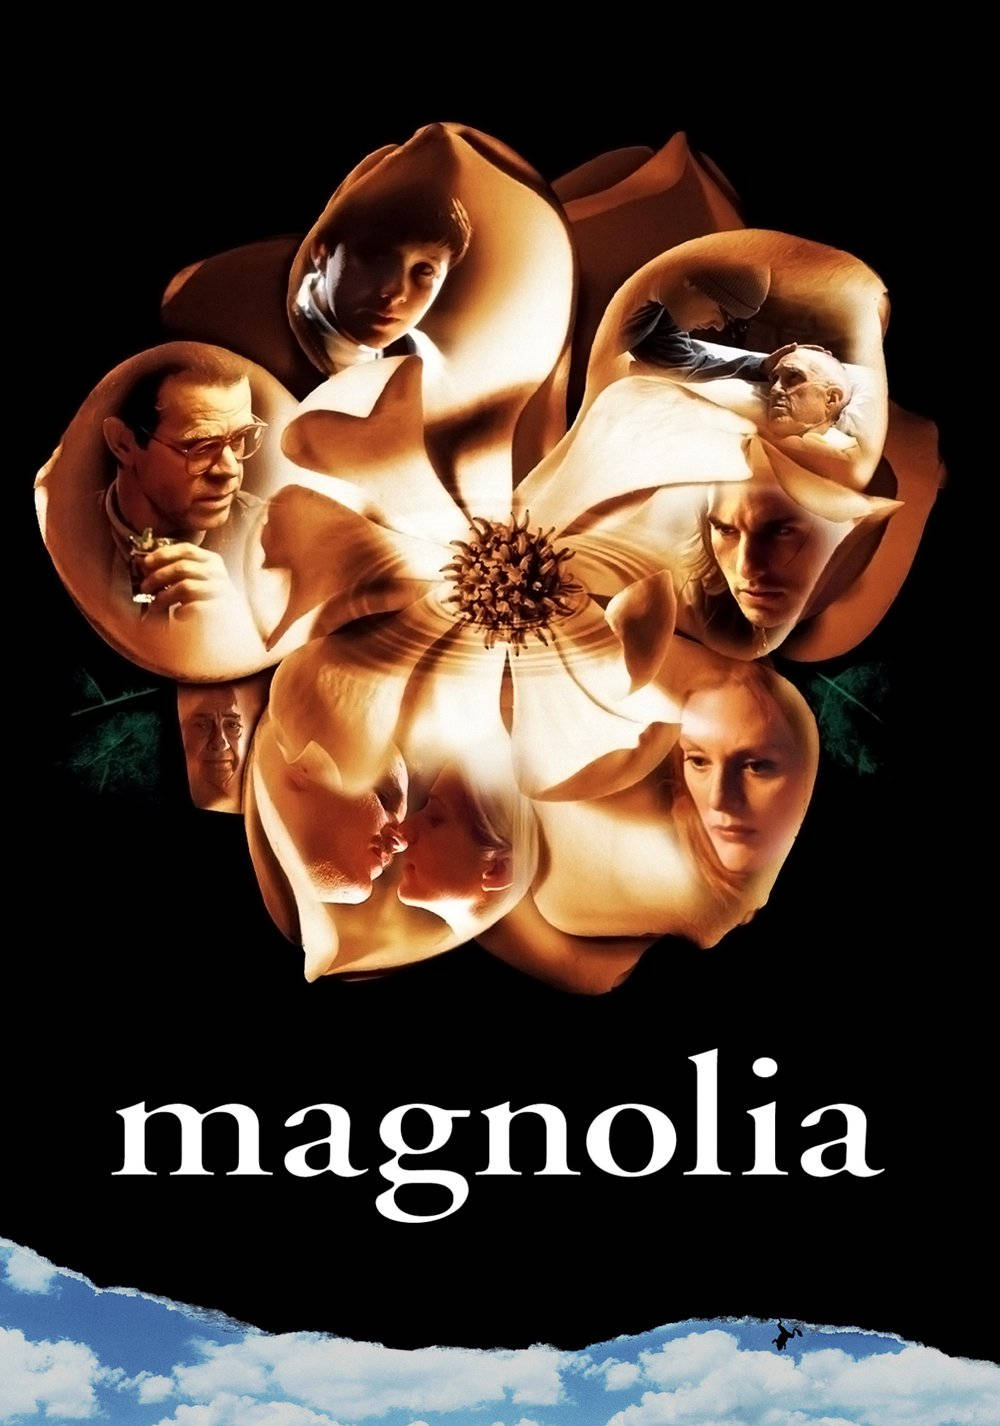 Magnolia Movie Characters In Flower Petals Wallpaper